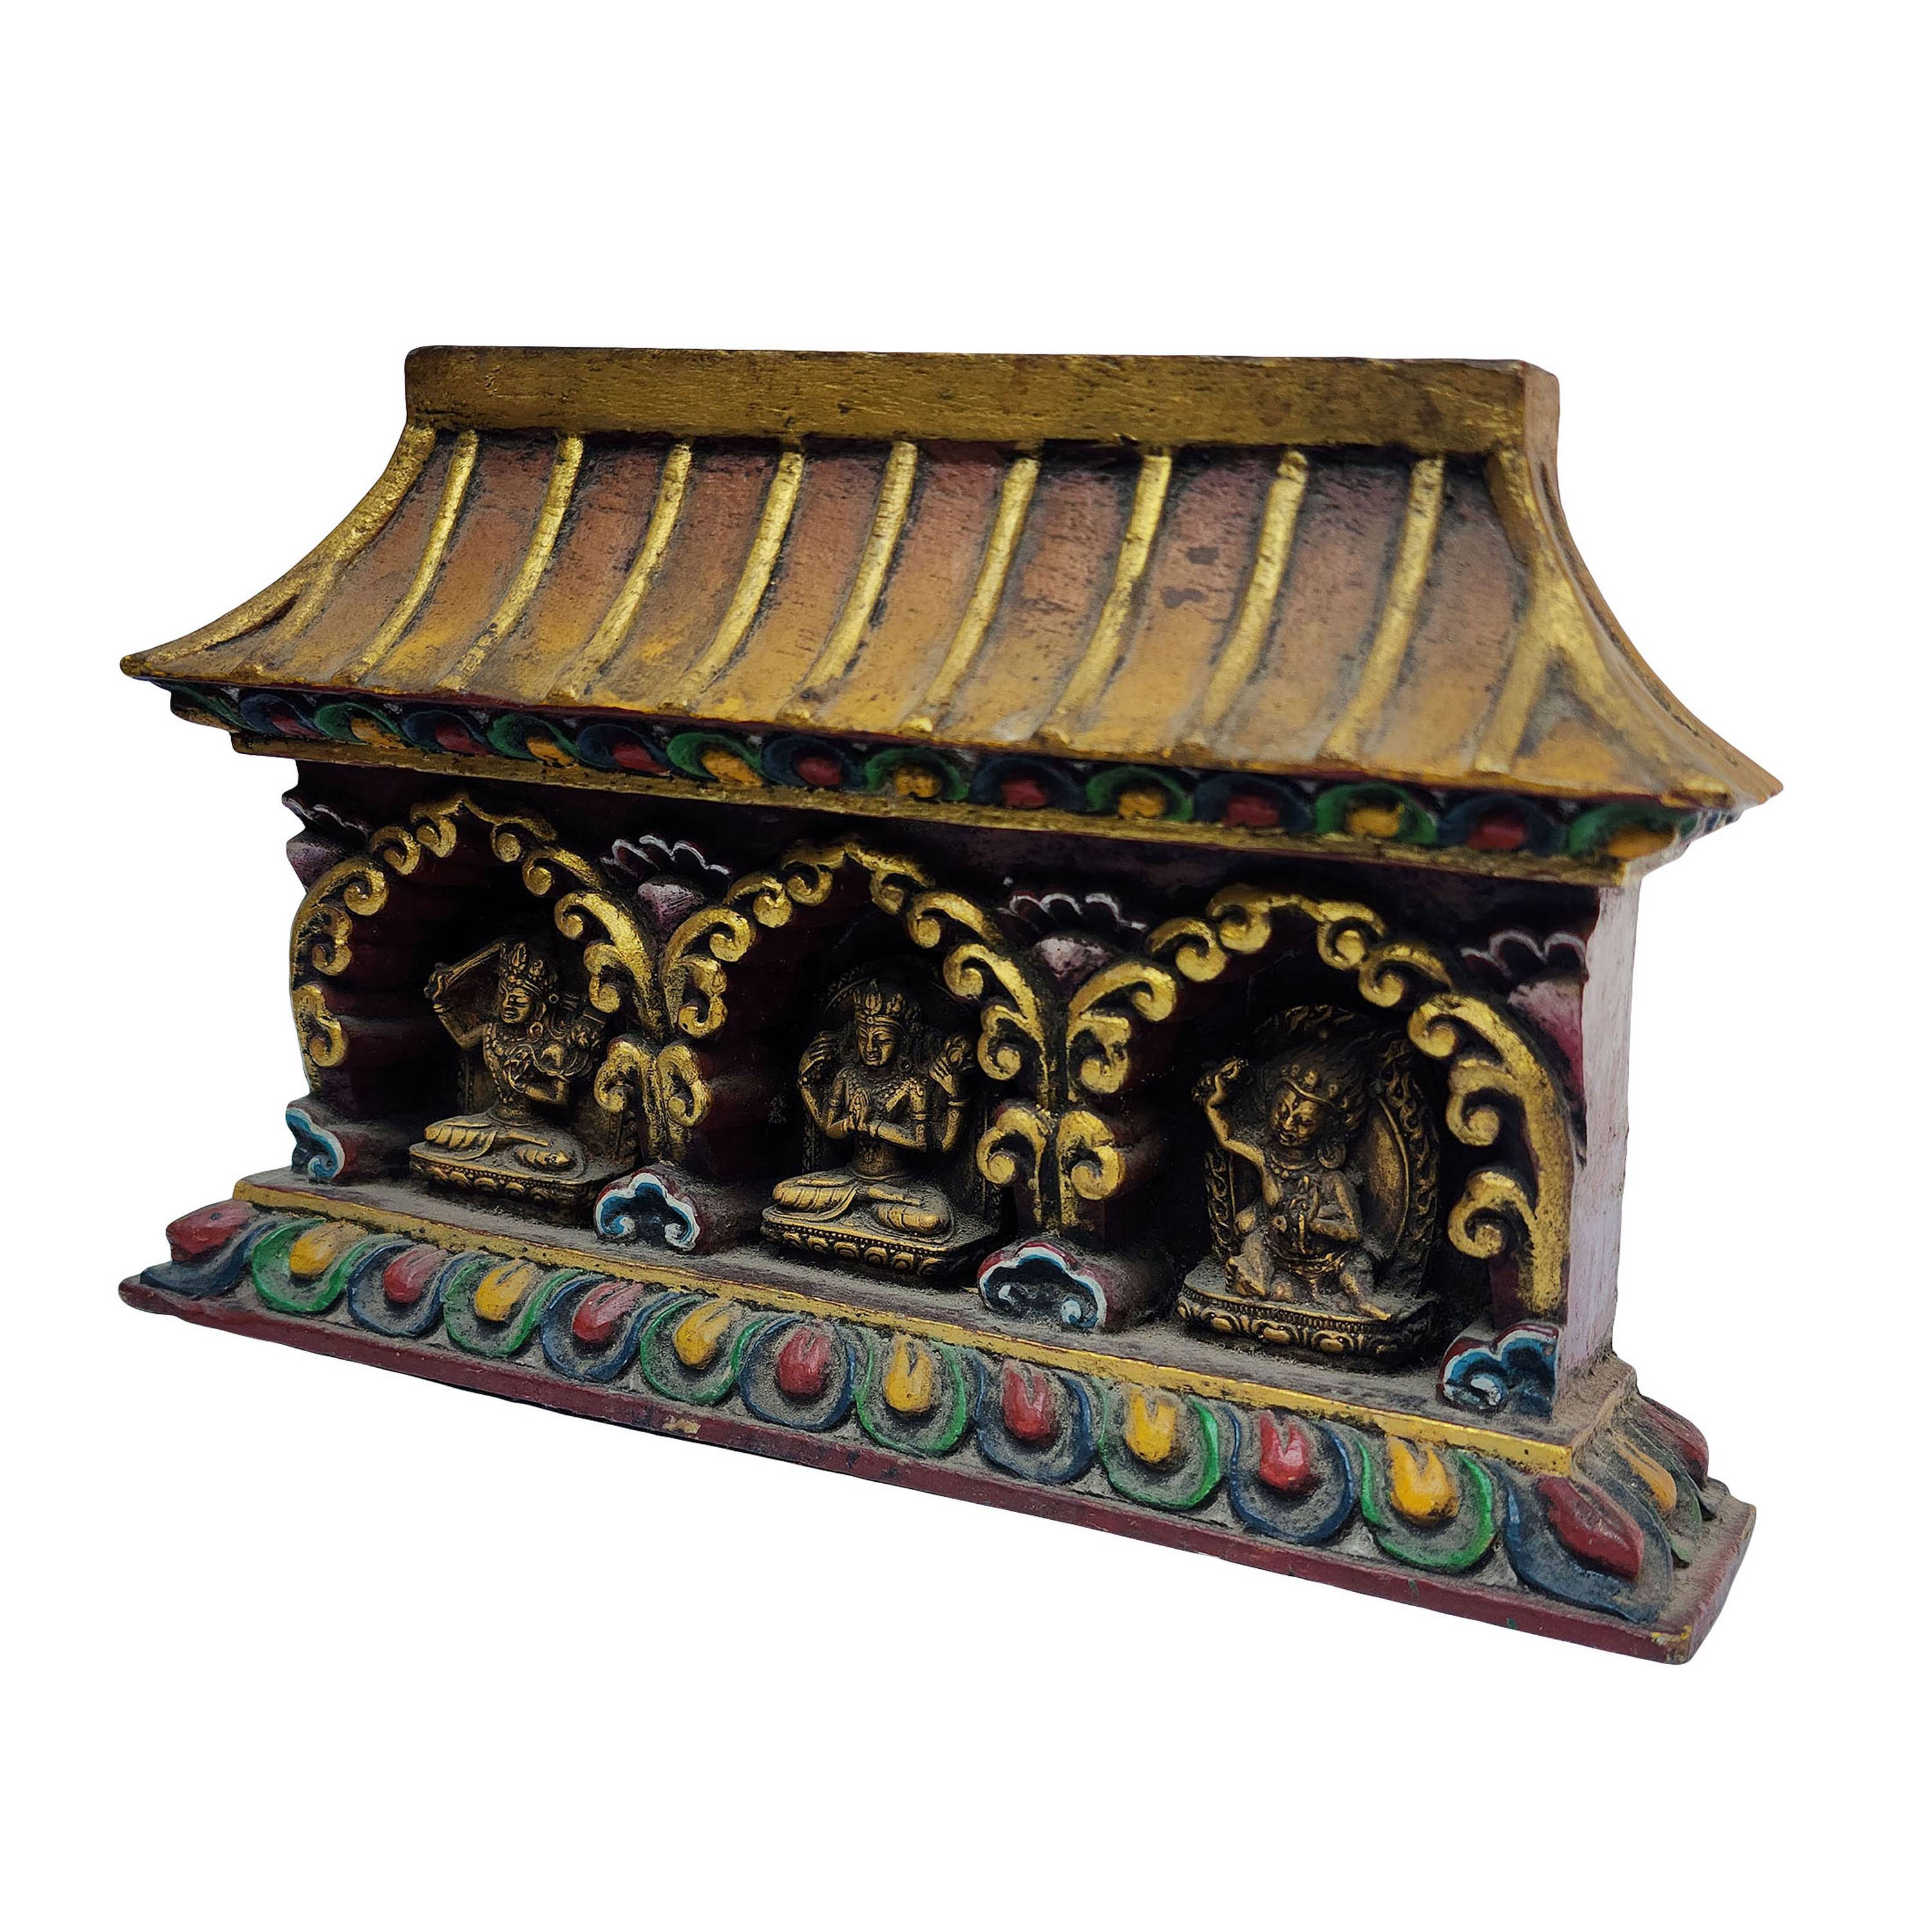 House Frame, Hand Carved Wooden Frame With Chenrezig, Manjushri, pagoda Style